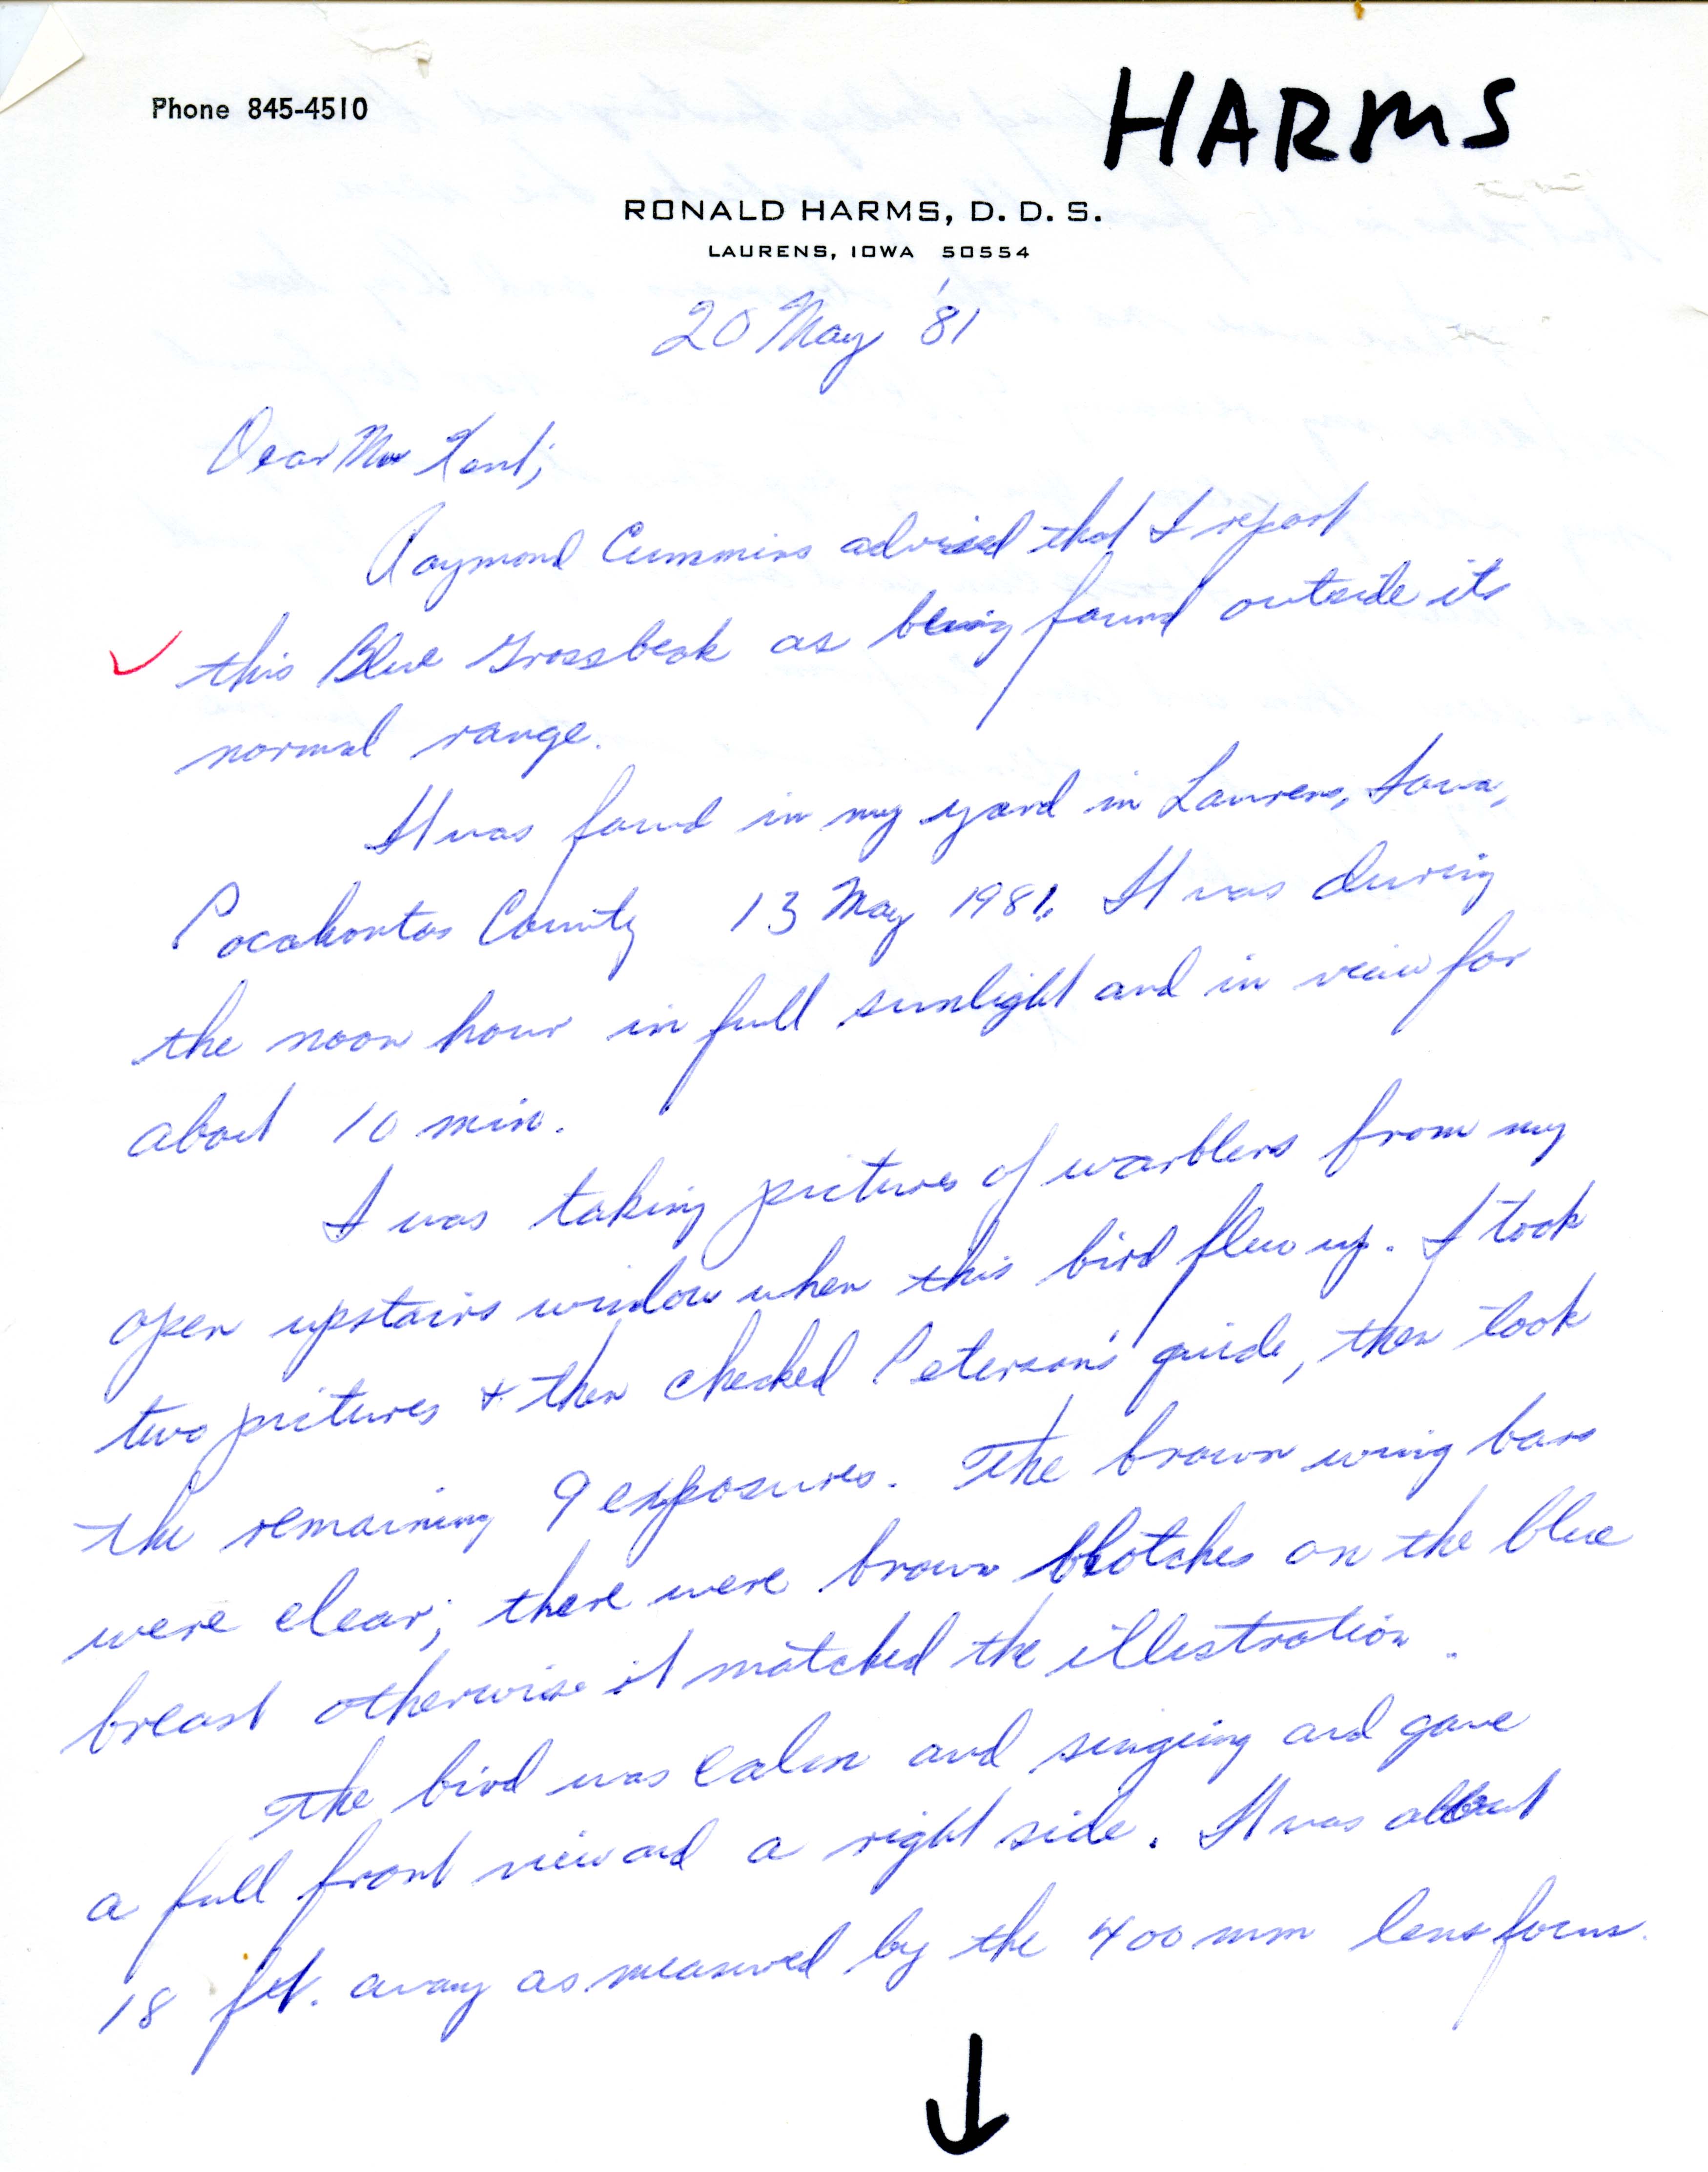 Ronald Harms letter to Thomas Kent regarding a Blue Grosbeak sighting, May 20, 1981